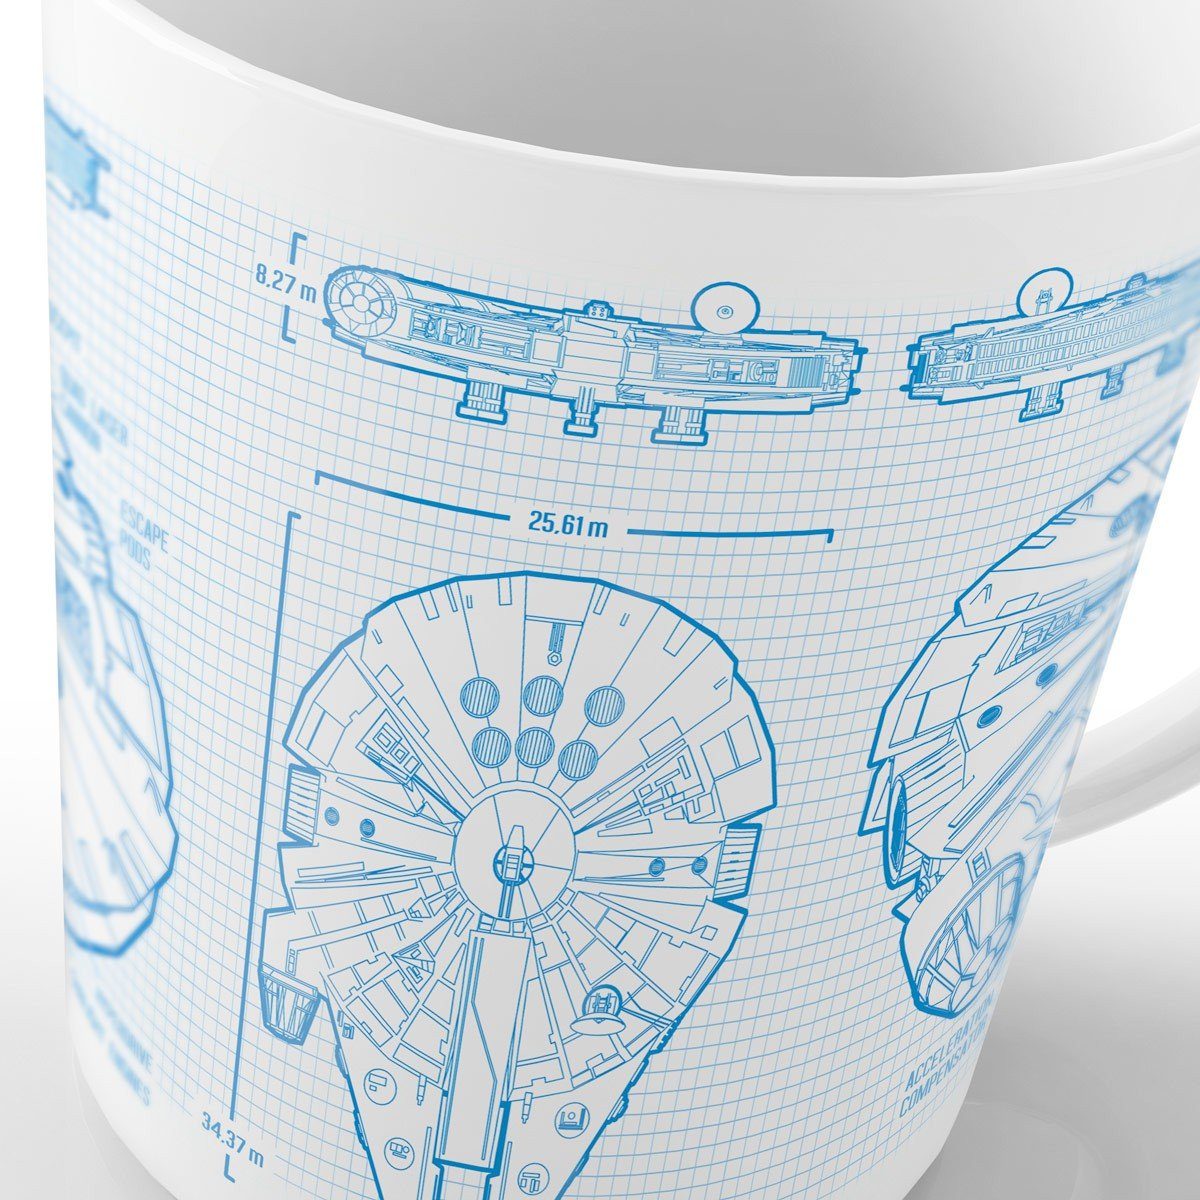 Kaffeebecher Millennium sterne style3 star blaupause Keramik, wars krieg yt-1300f falke der Falcon Tasse Tasse, rasender